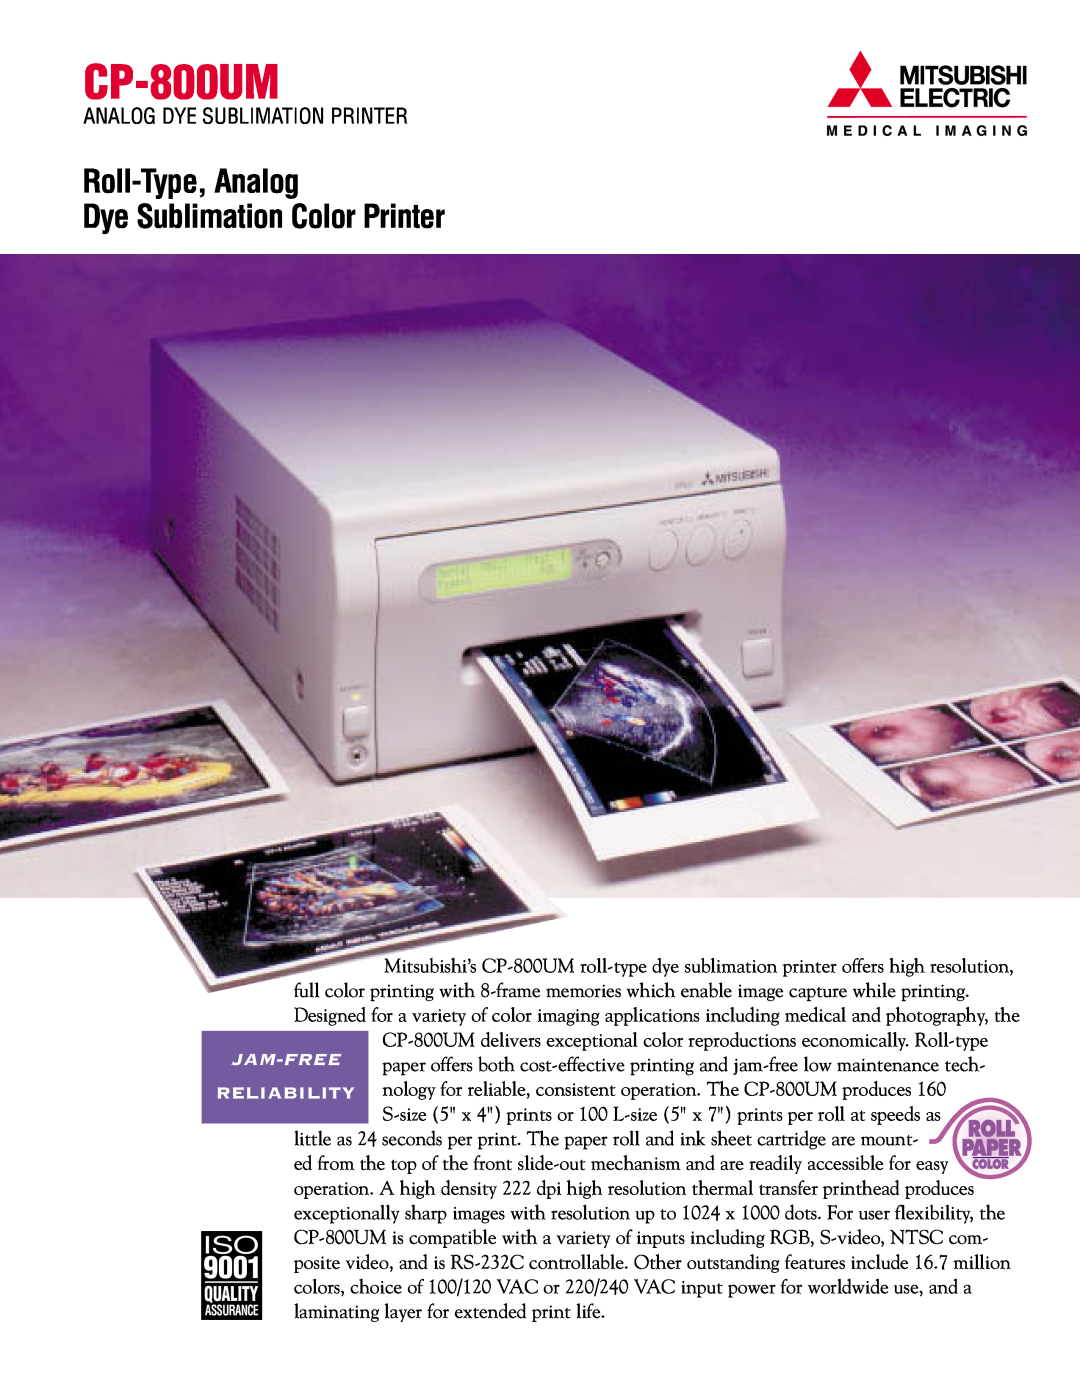 Mitsubishi Electronics CP-800UM manual Analog Dye Sublimation Printer, Roll-Type, Analog Dye Sublimation Color Printer 